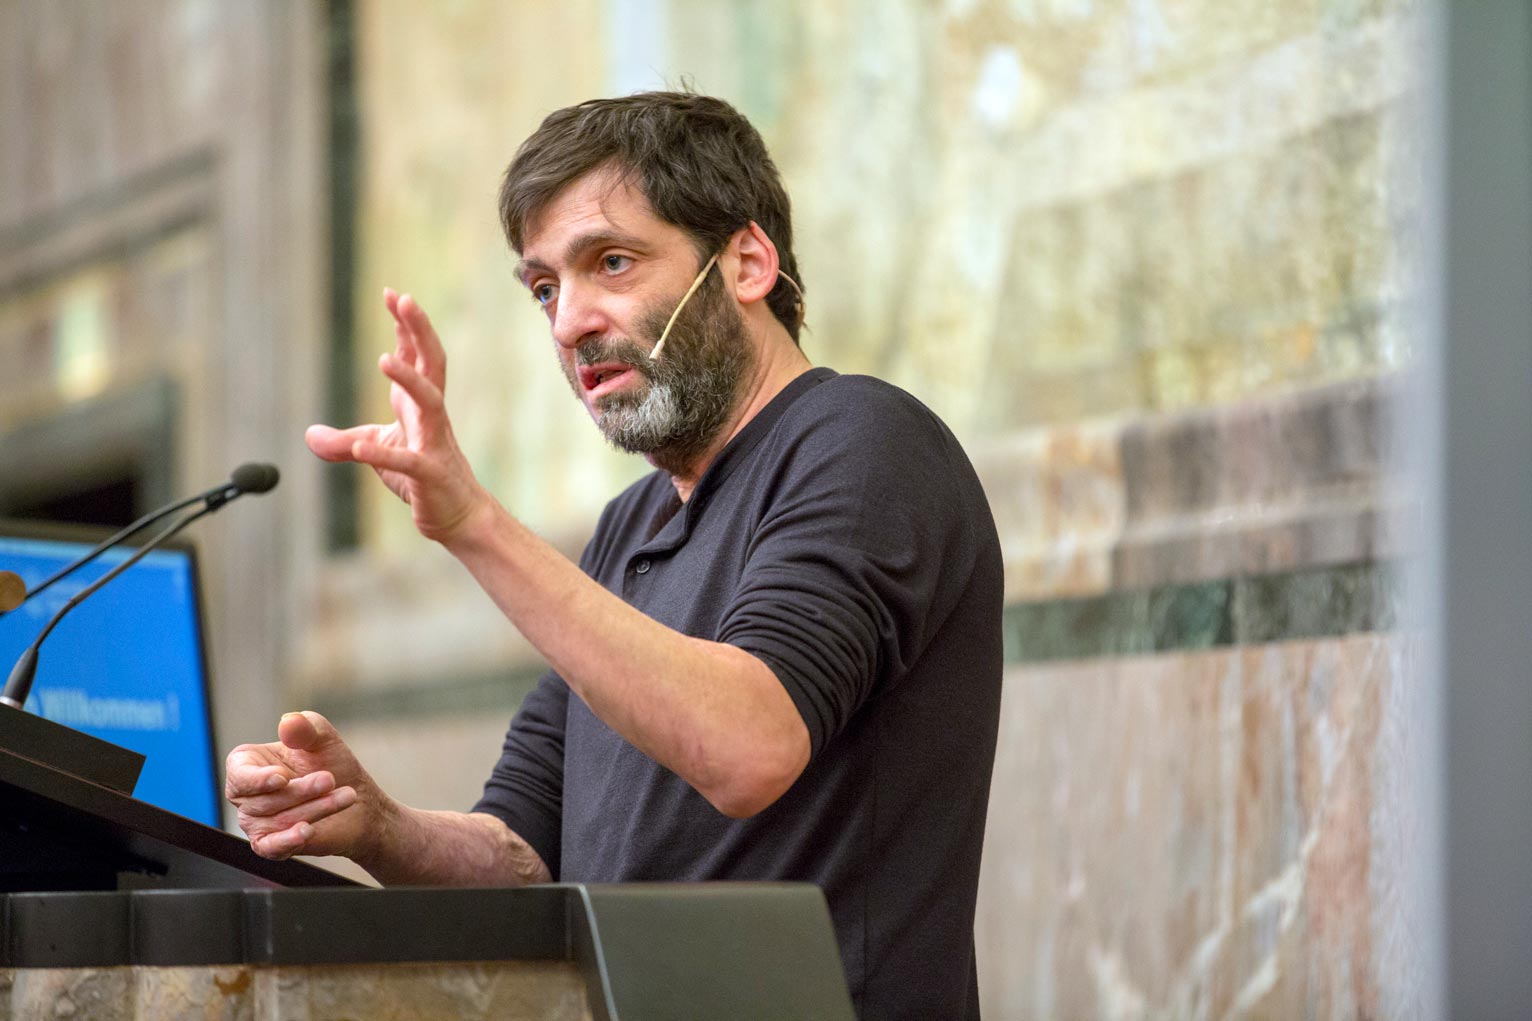 Dan Ariely, James B. Duke Professor of Behavioral Economics at Duke University